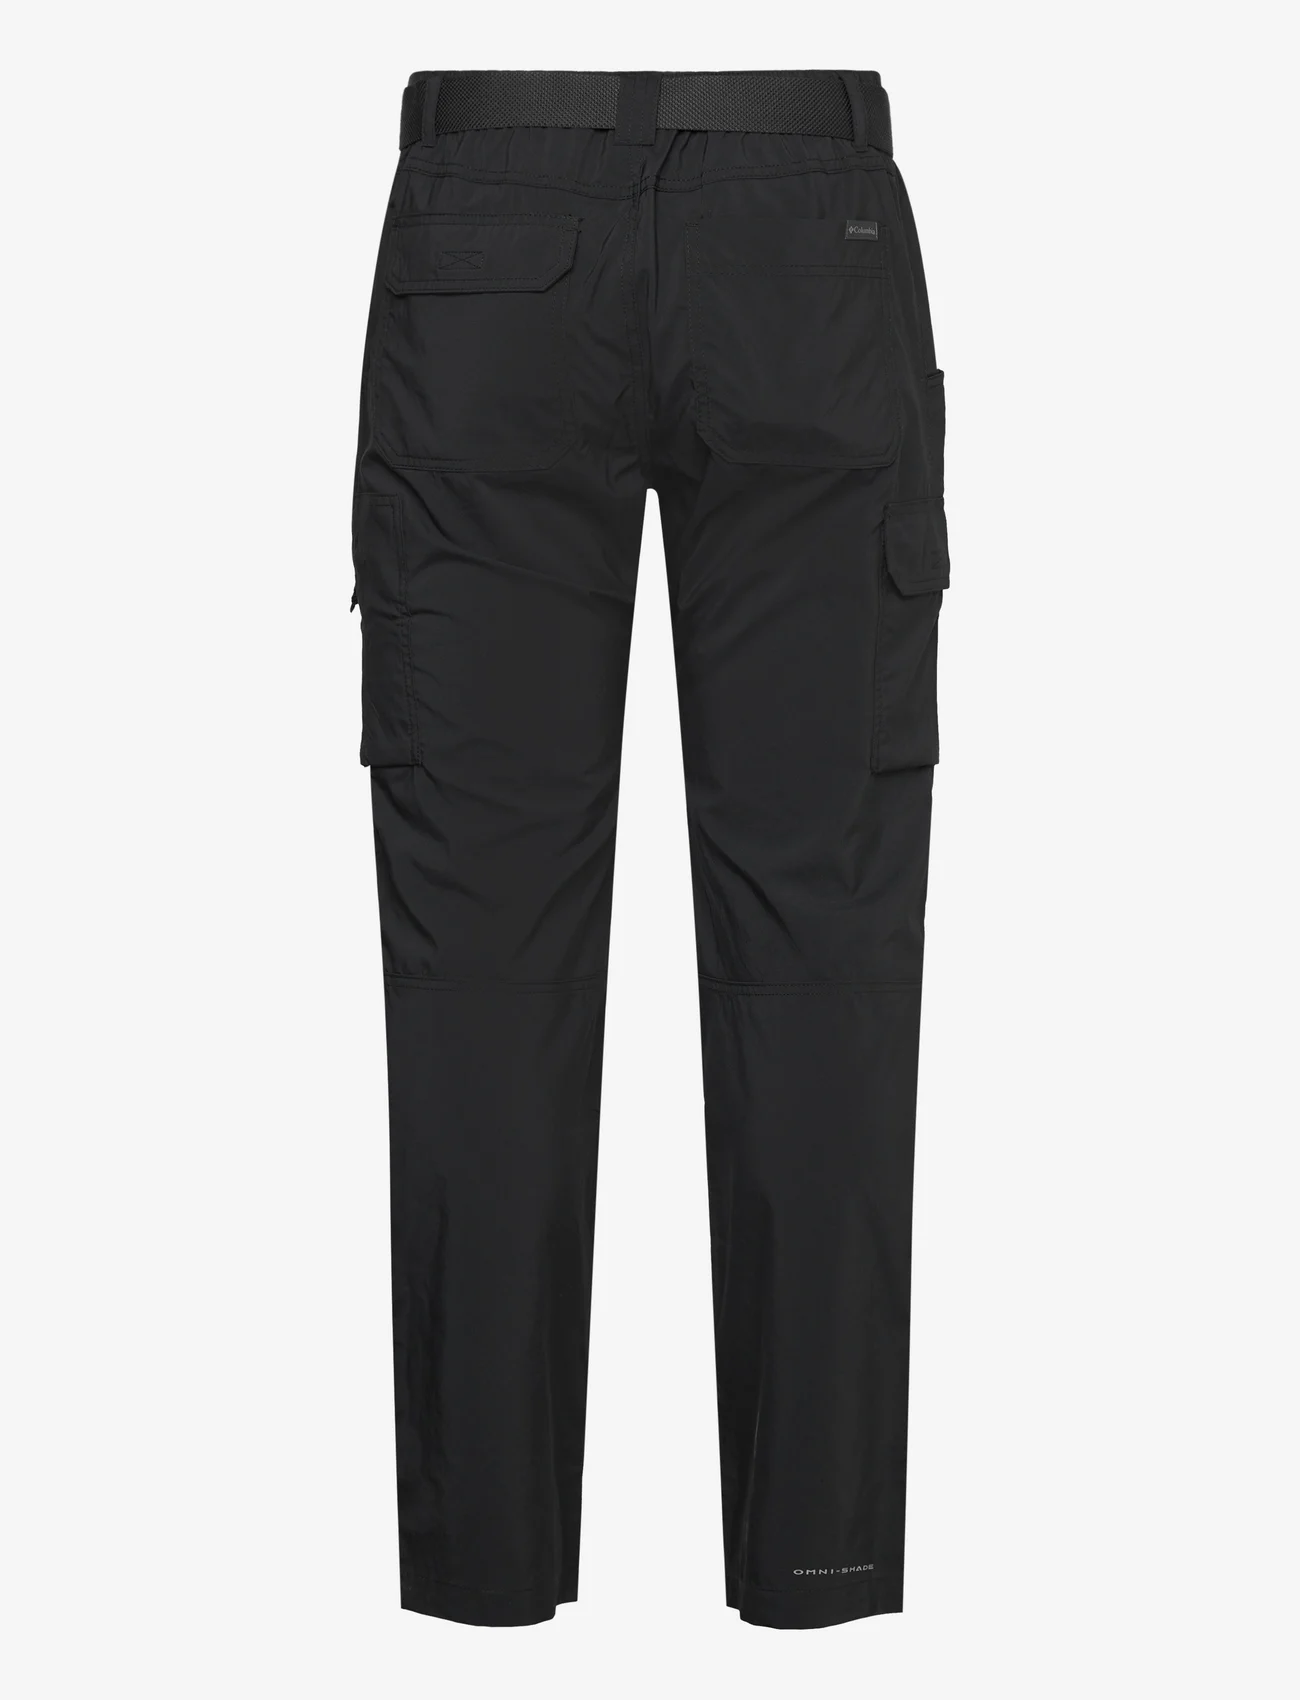 Columbia Sportswear - Silver Ridge Utility Pant - friluftsbyxor - black - 1